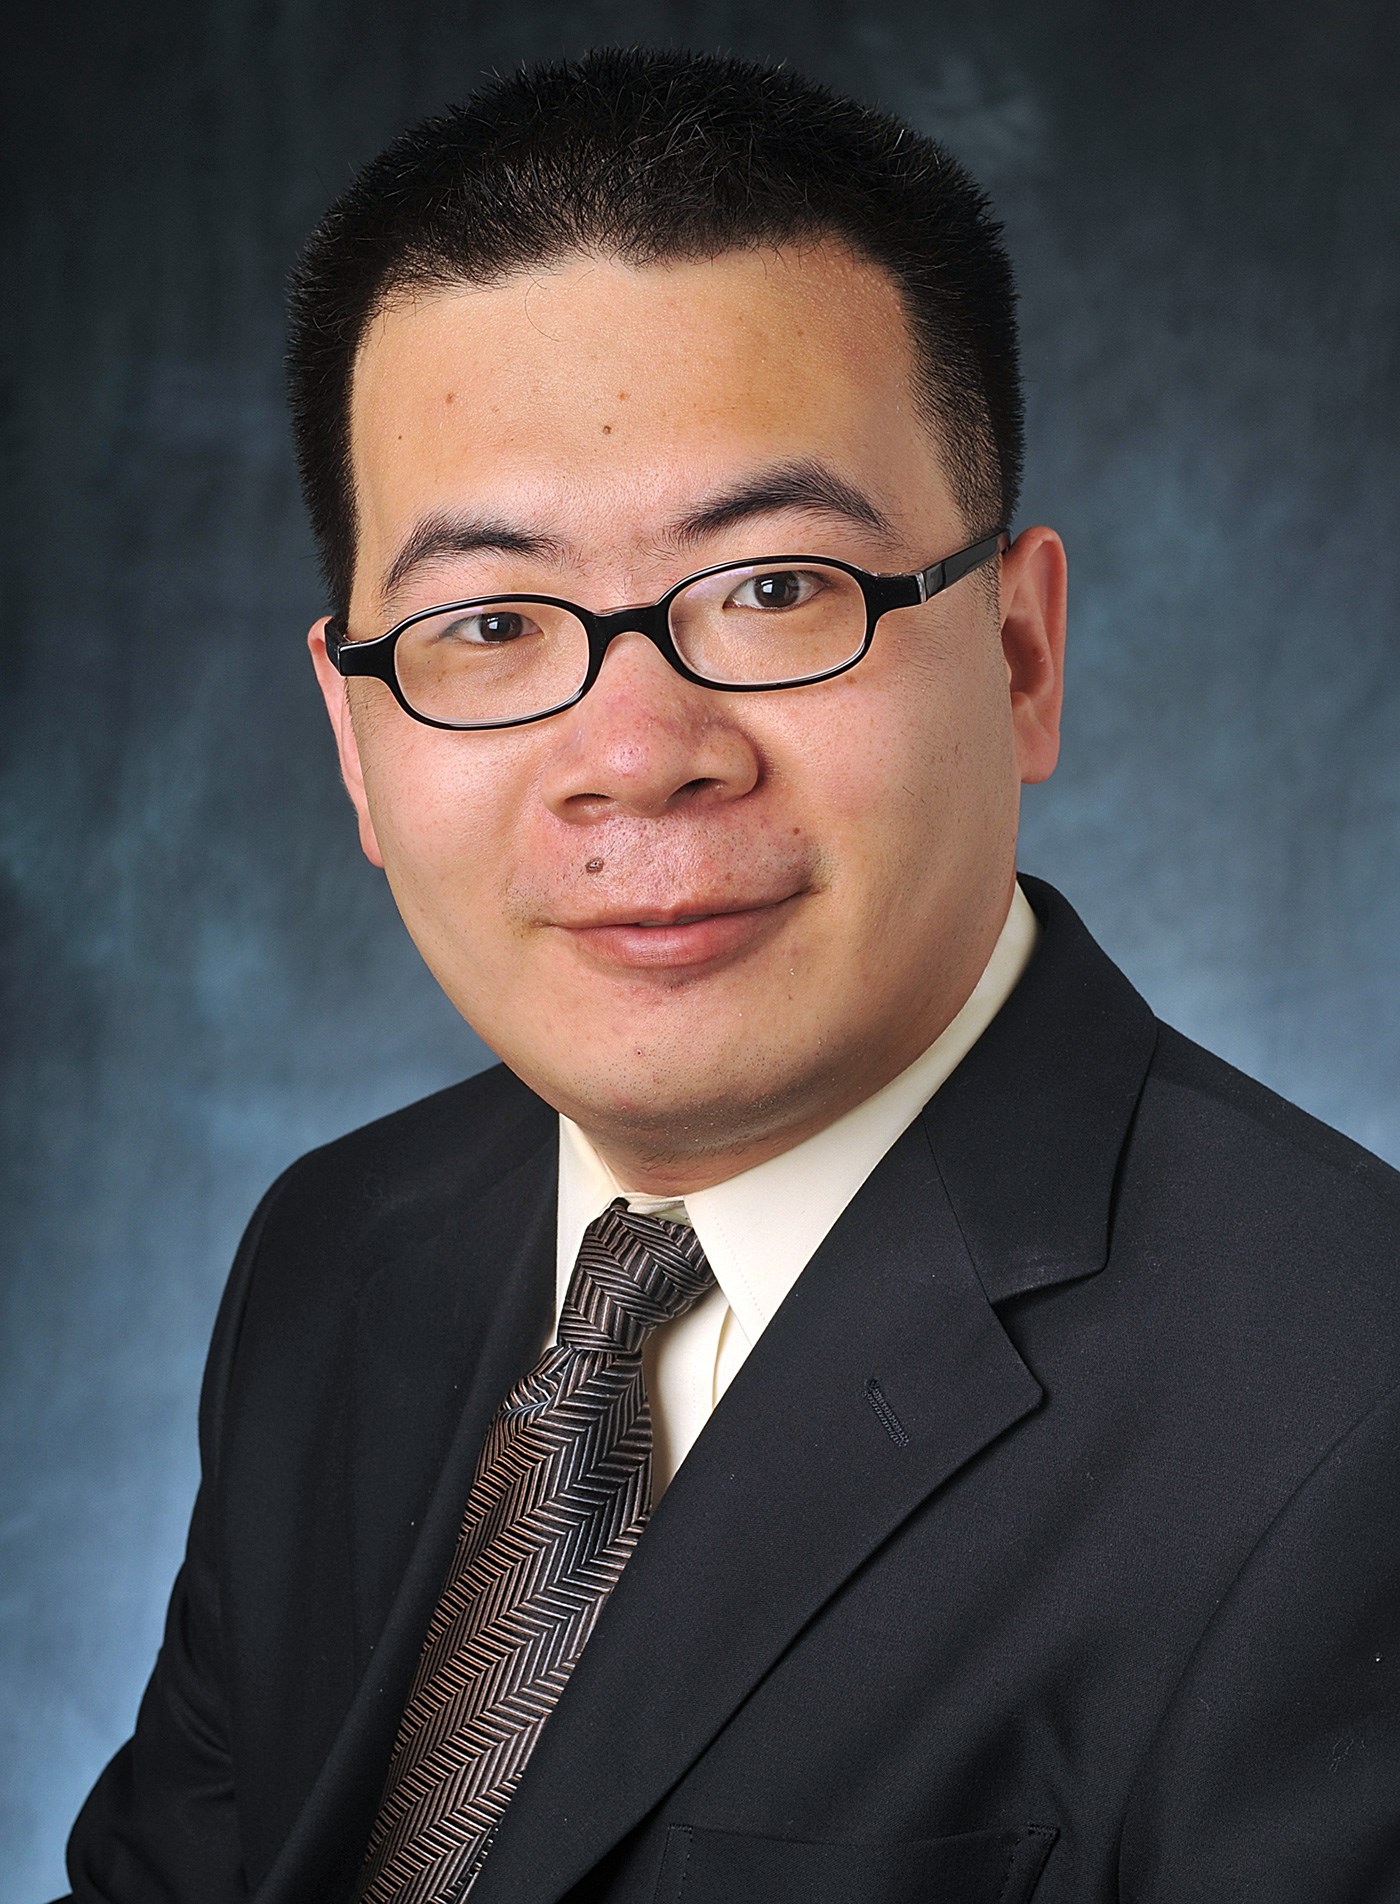 Ben Li is an Assistant Professor in the Economics Dept. at UMass Lowell.